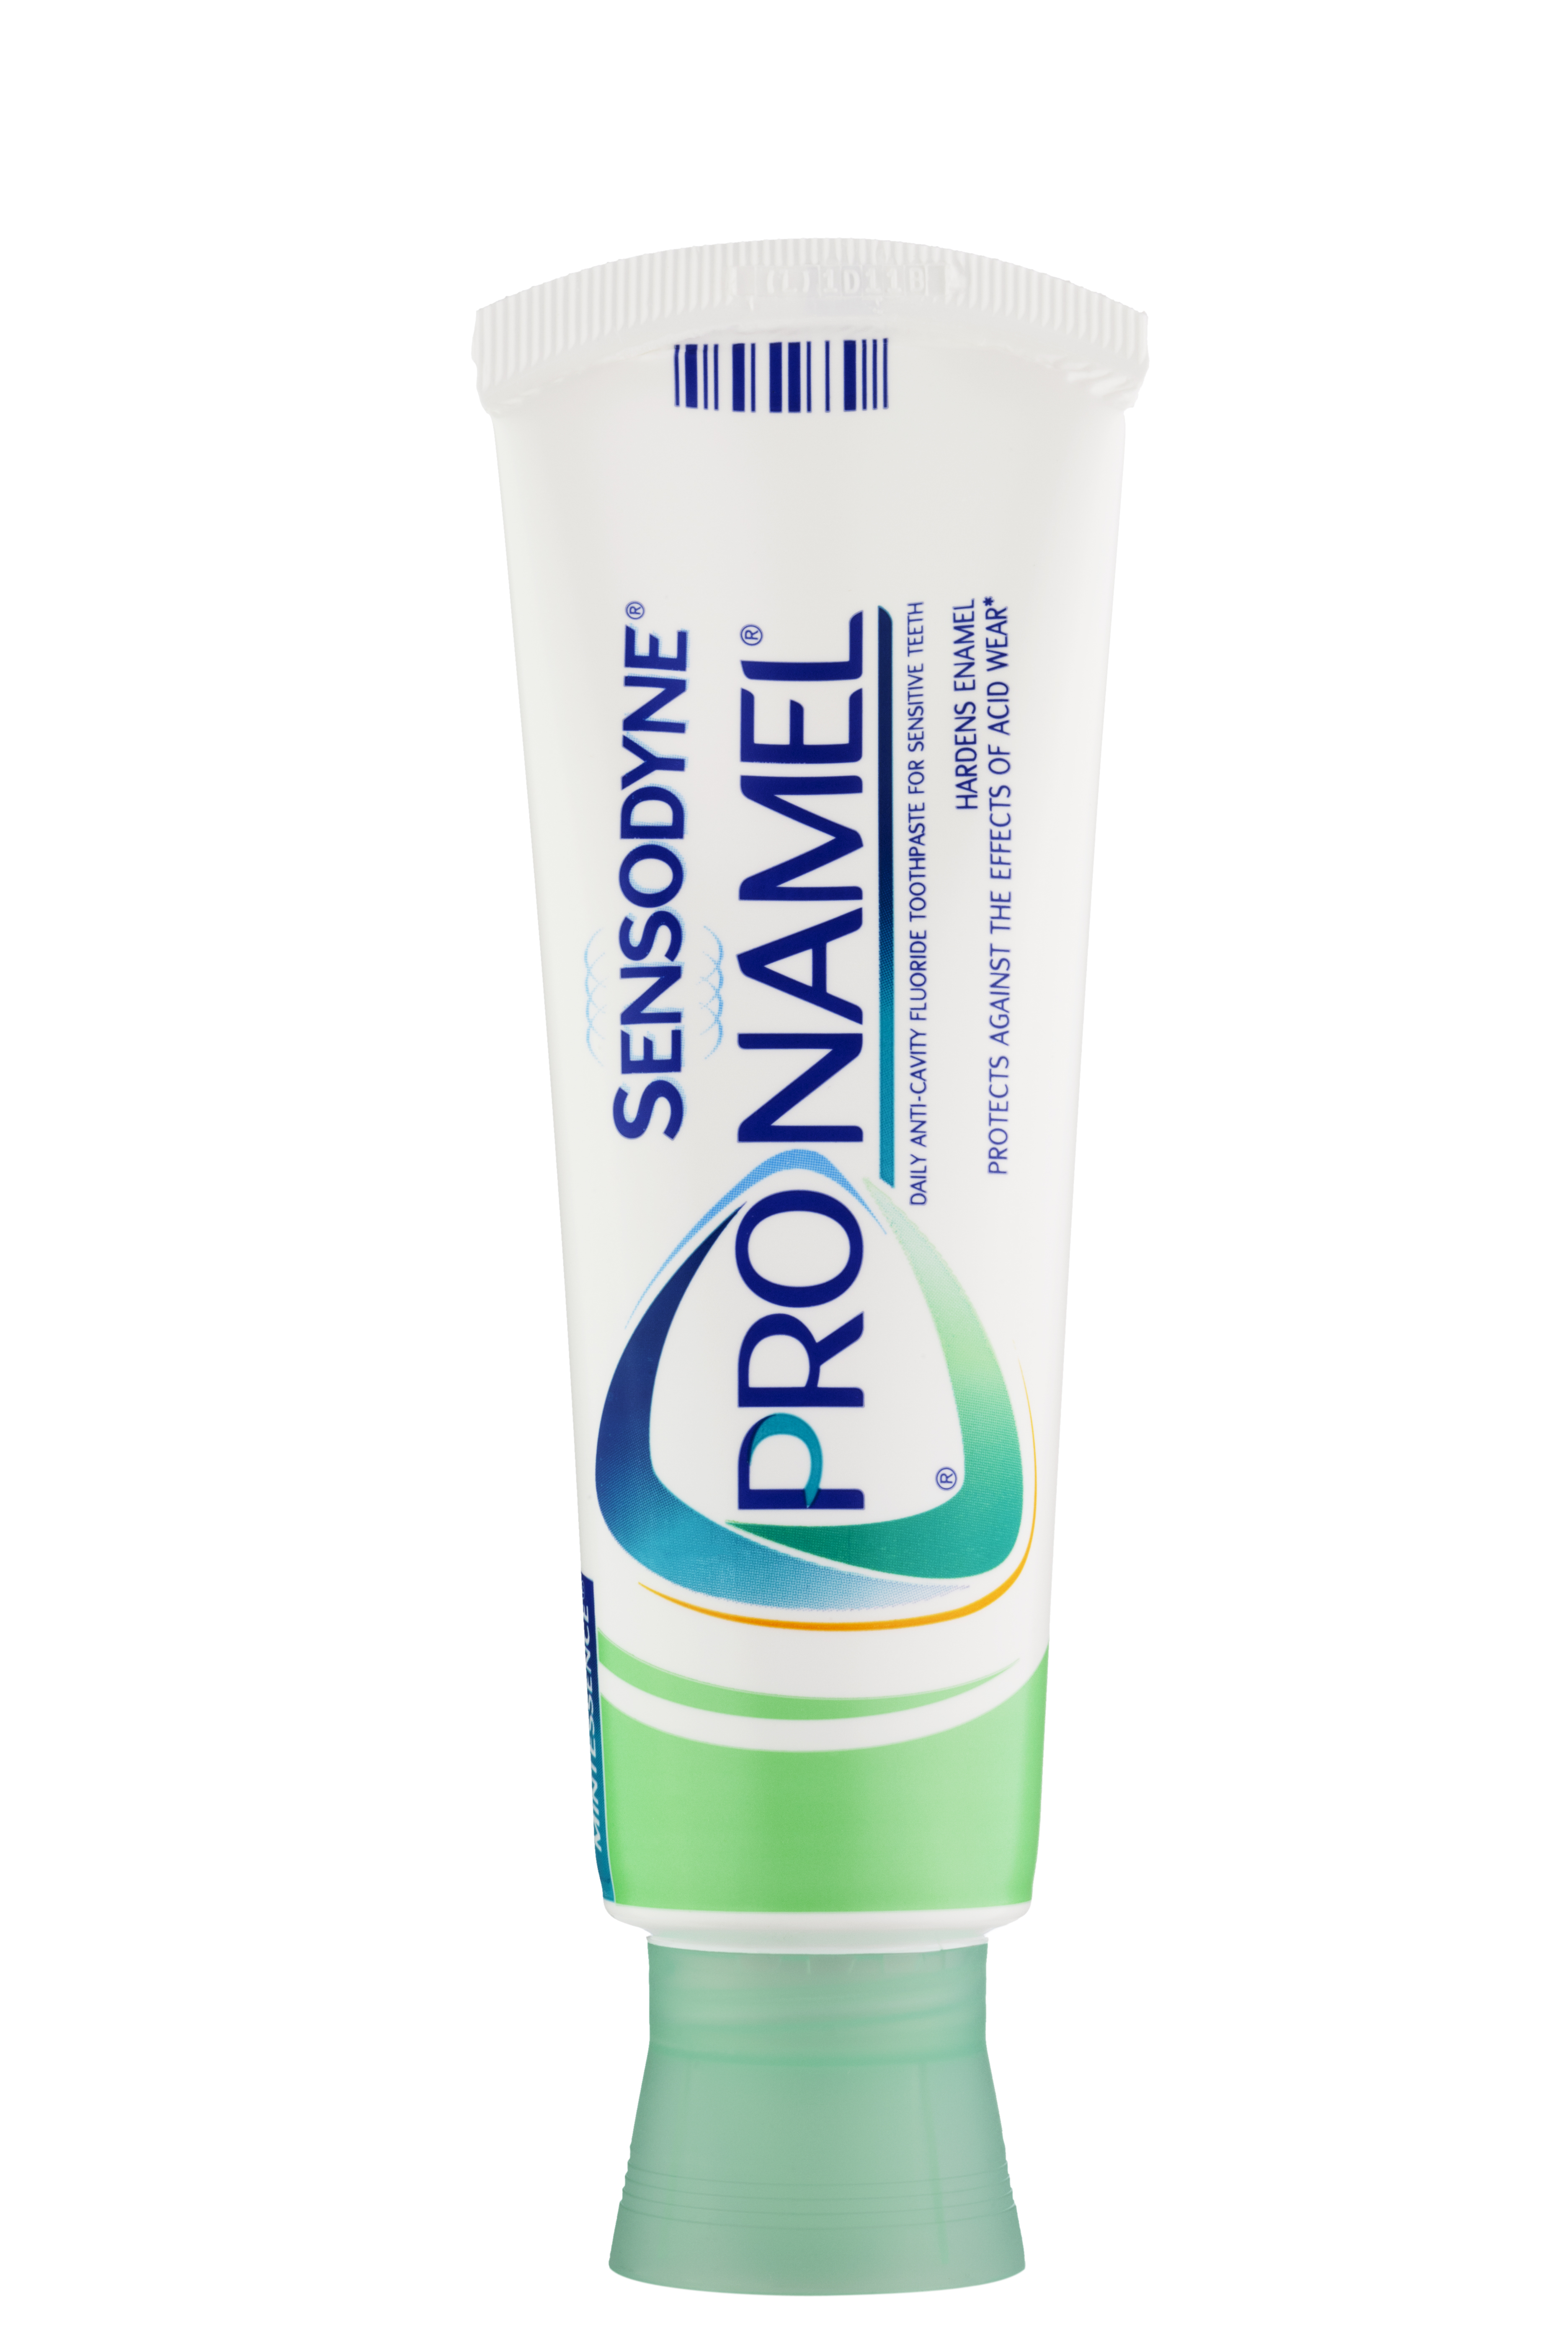 Sensodyne Pronamel toothpaste tube against a white background